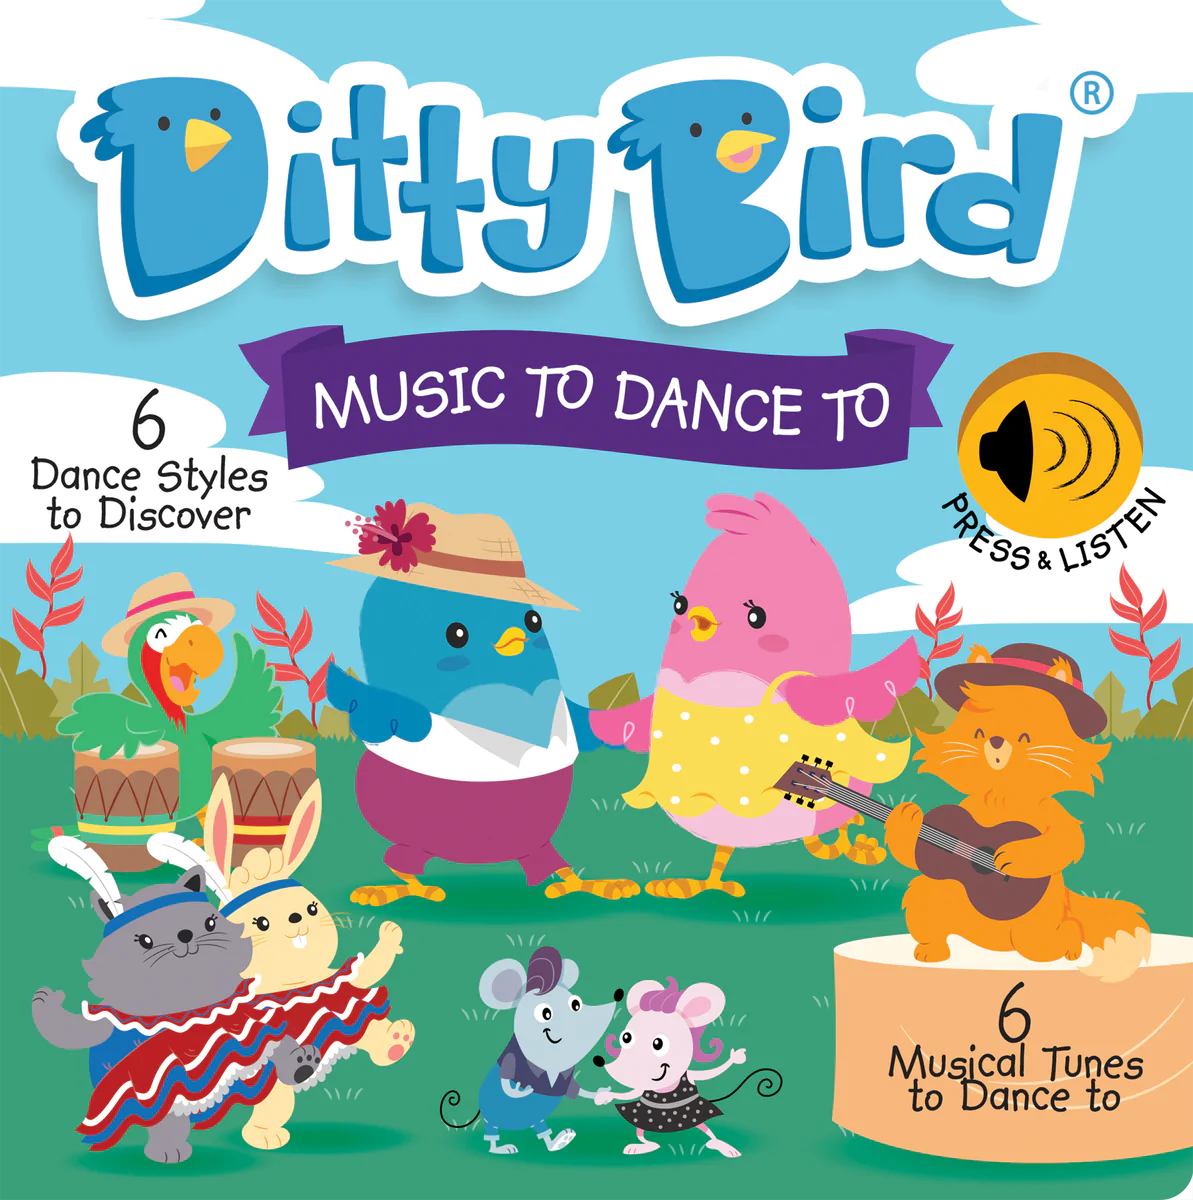 Ditty Bird- Music to Dance To